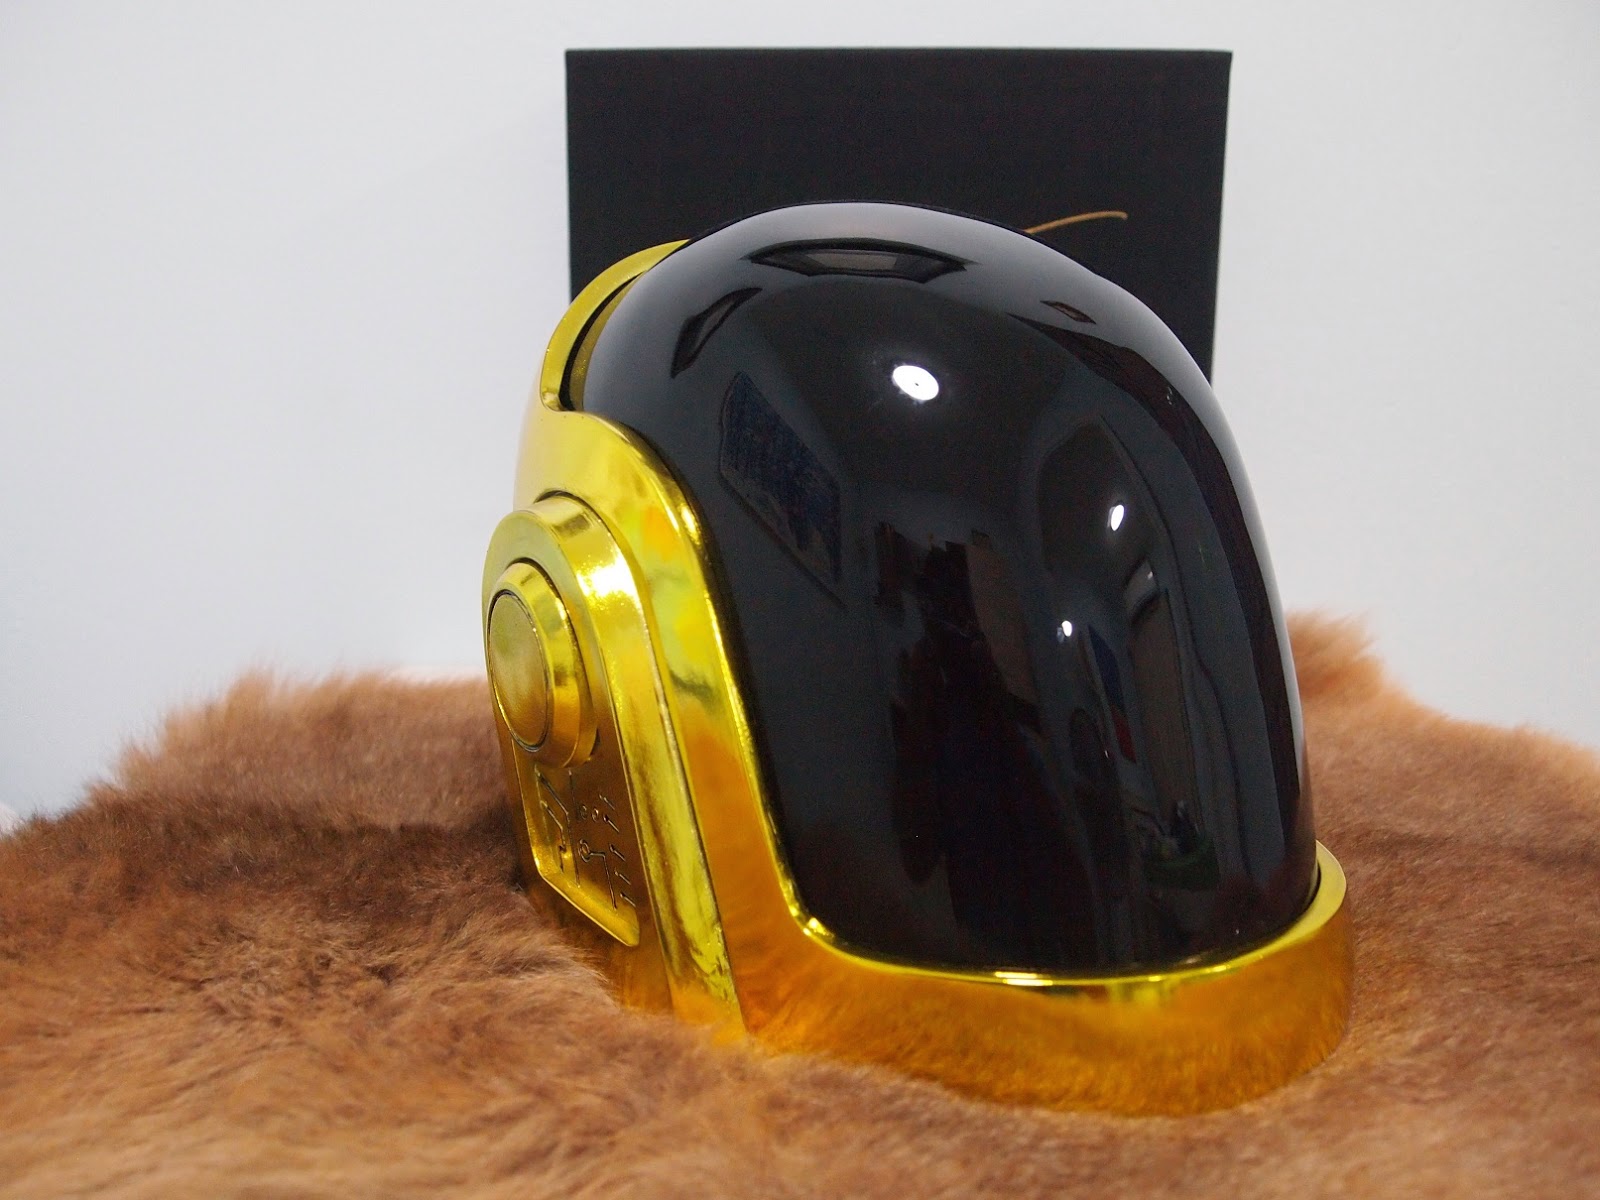 Daft Punk Helmet for Sale !: Guy Daft punk Helmet